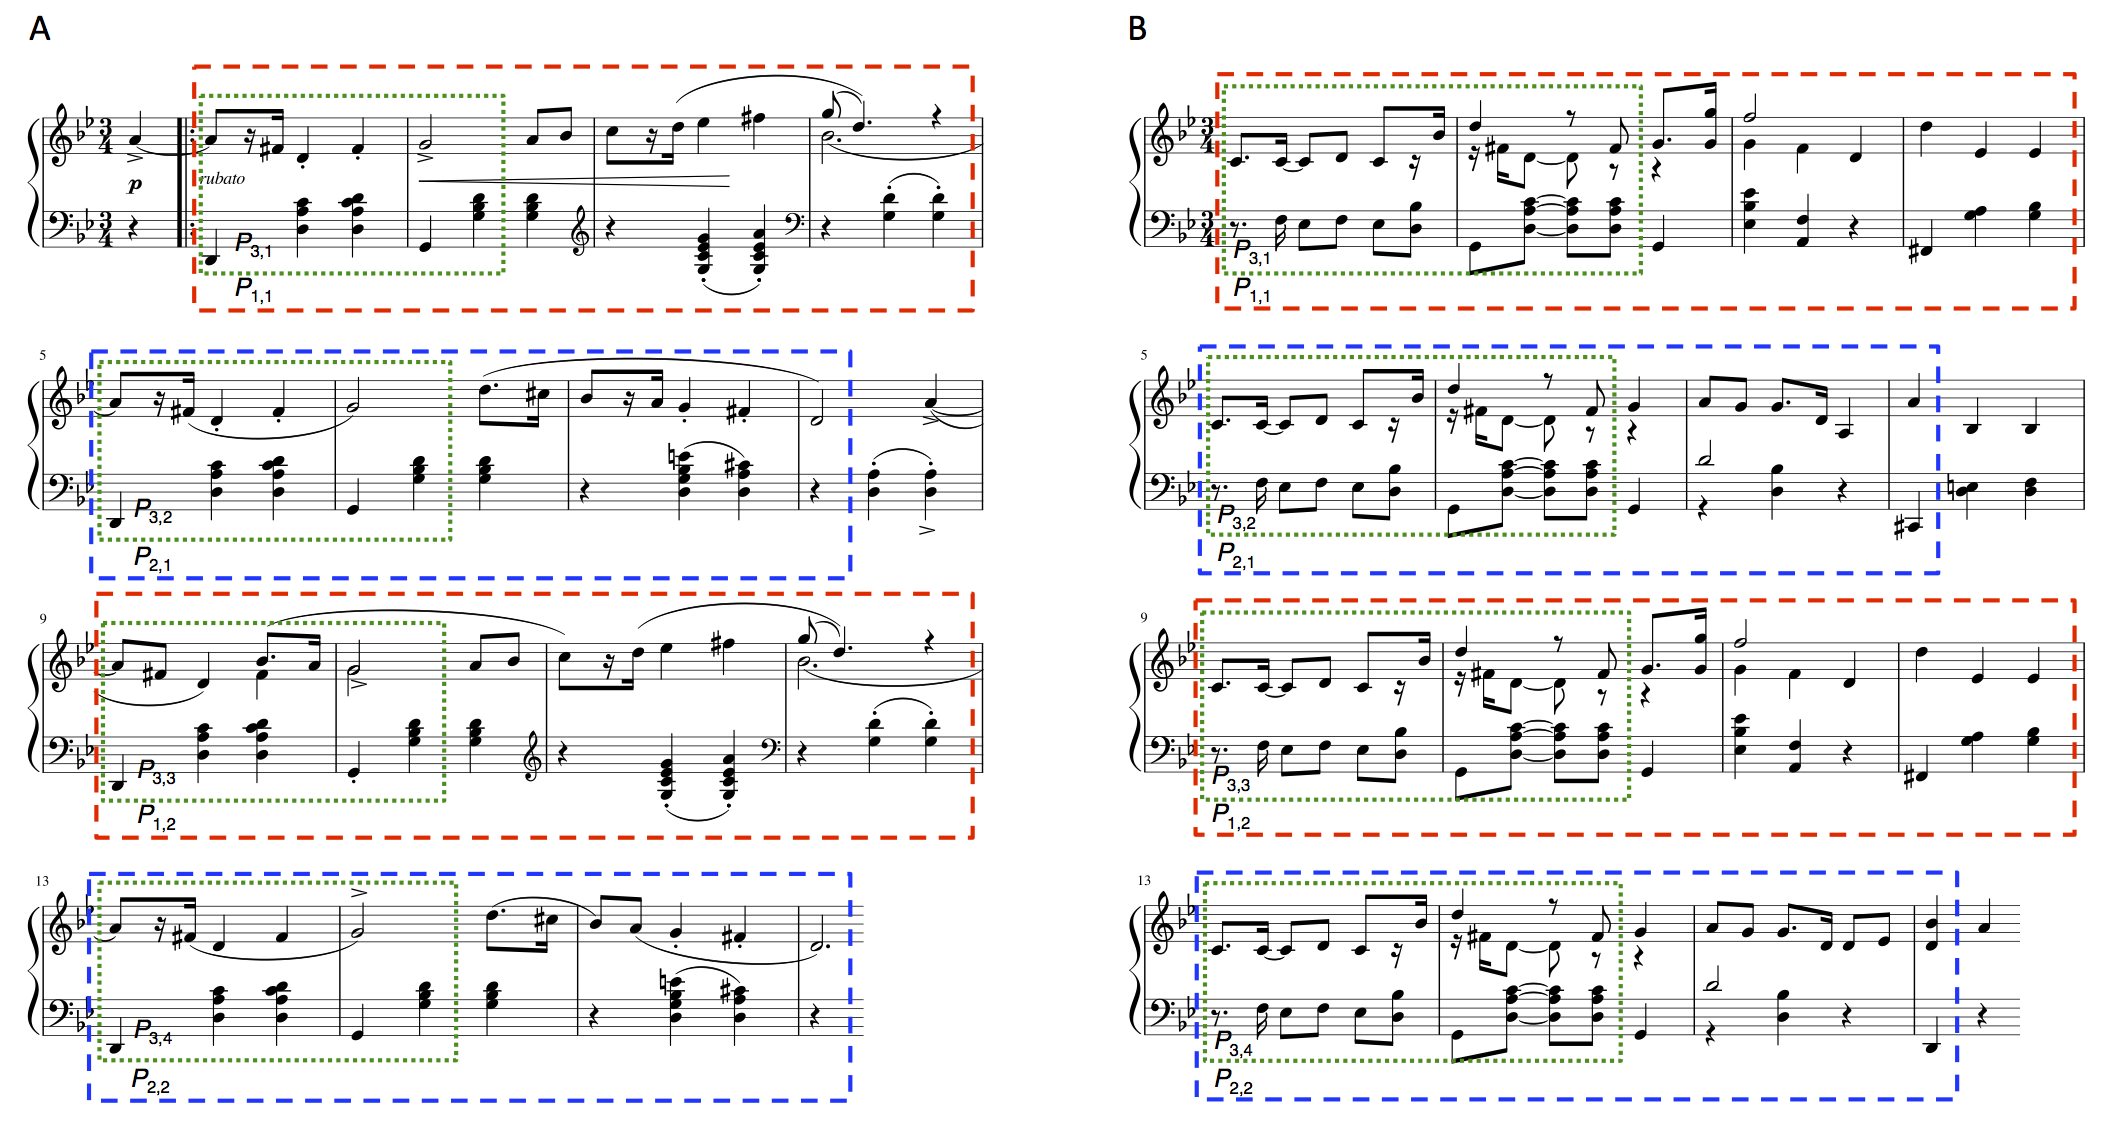 original and generated Chopin mazurka excerpts